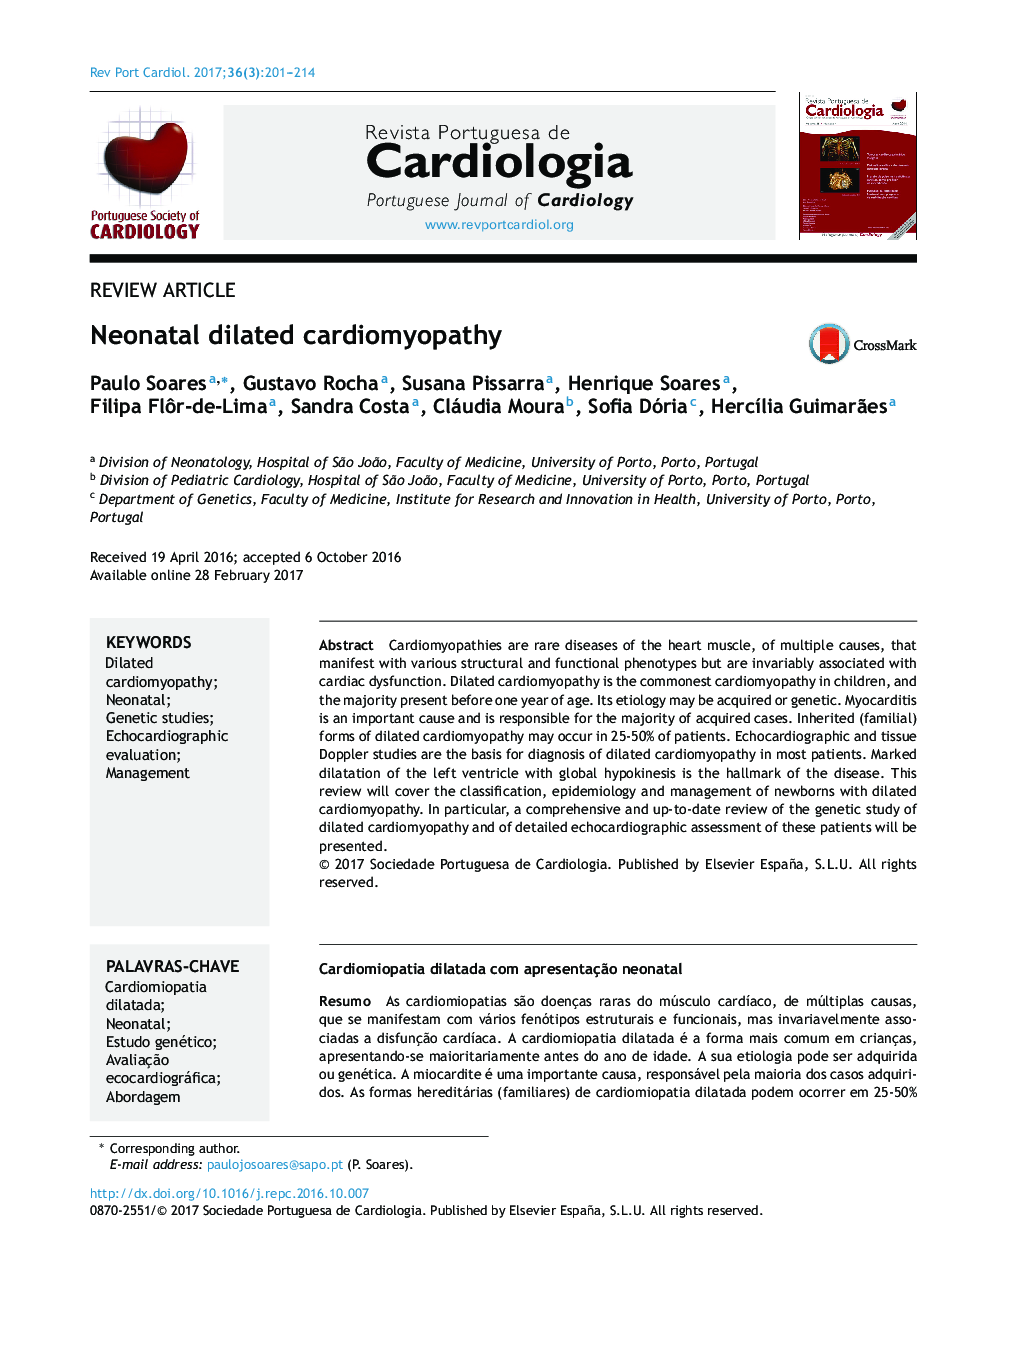 Neonatal dilated cardiomyopathy